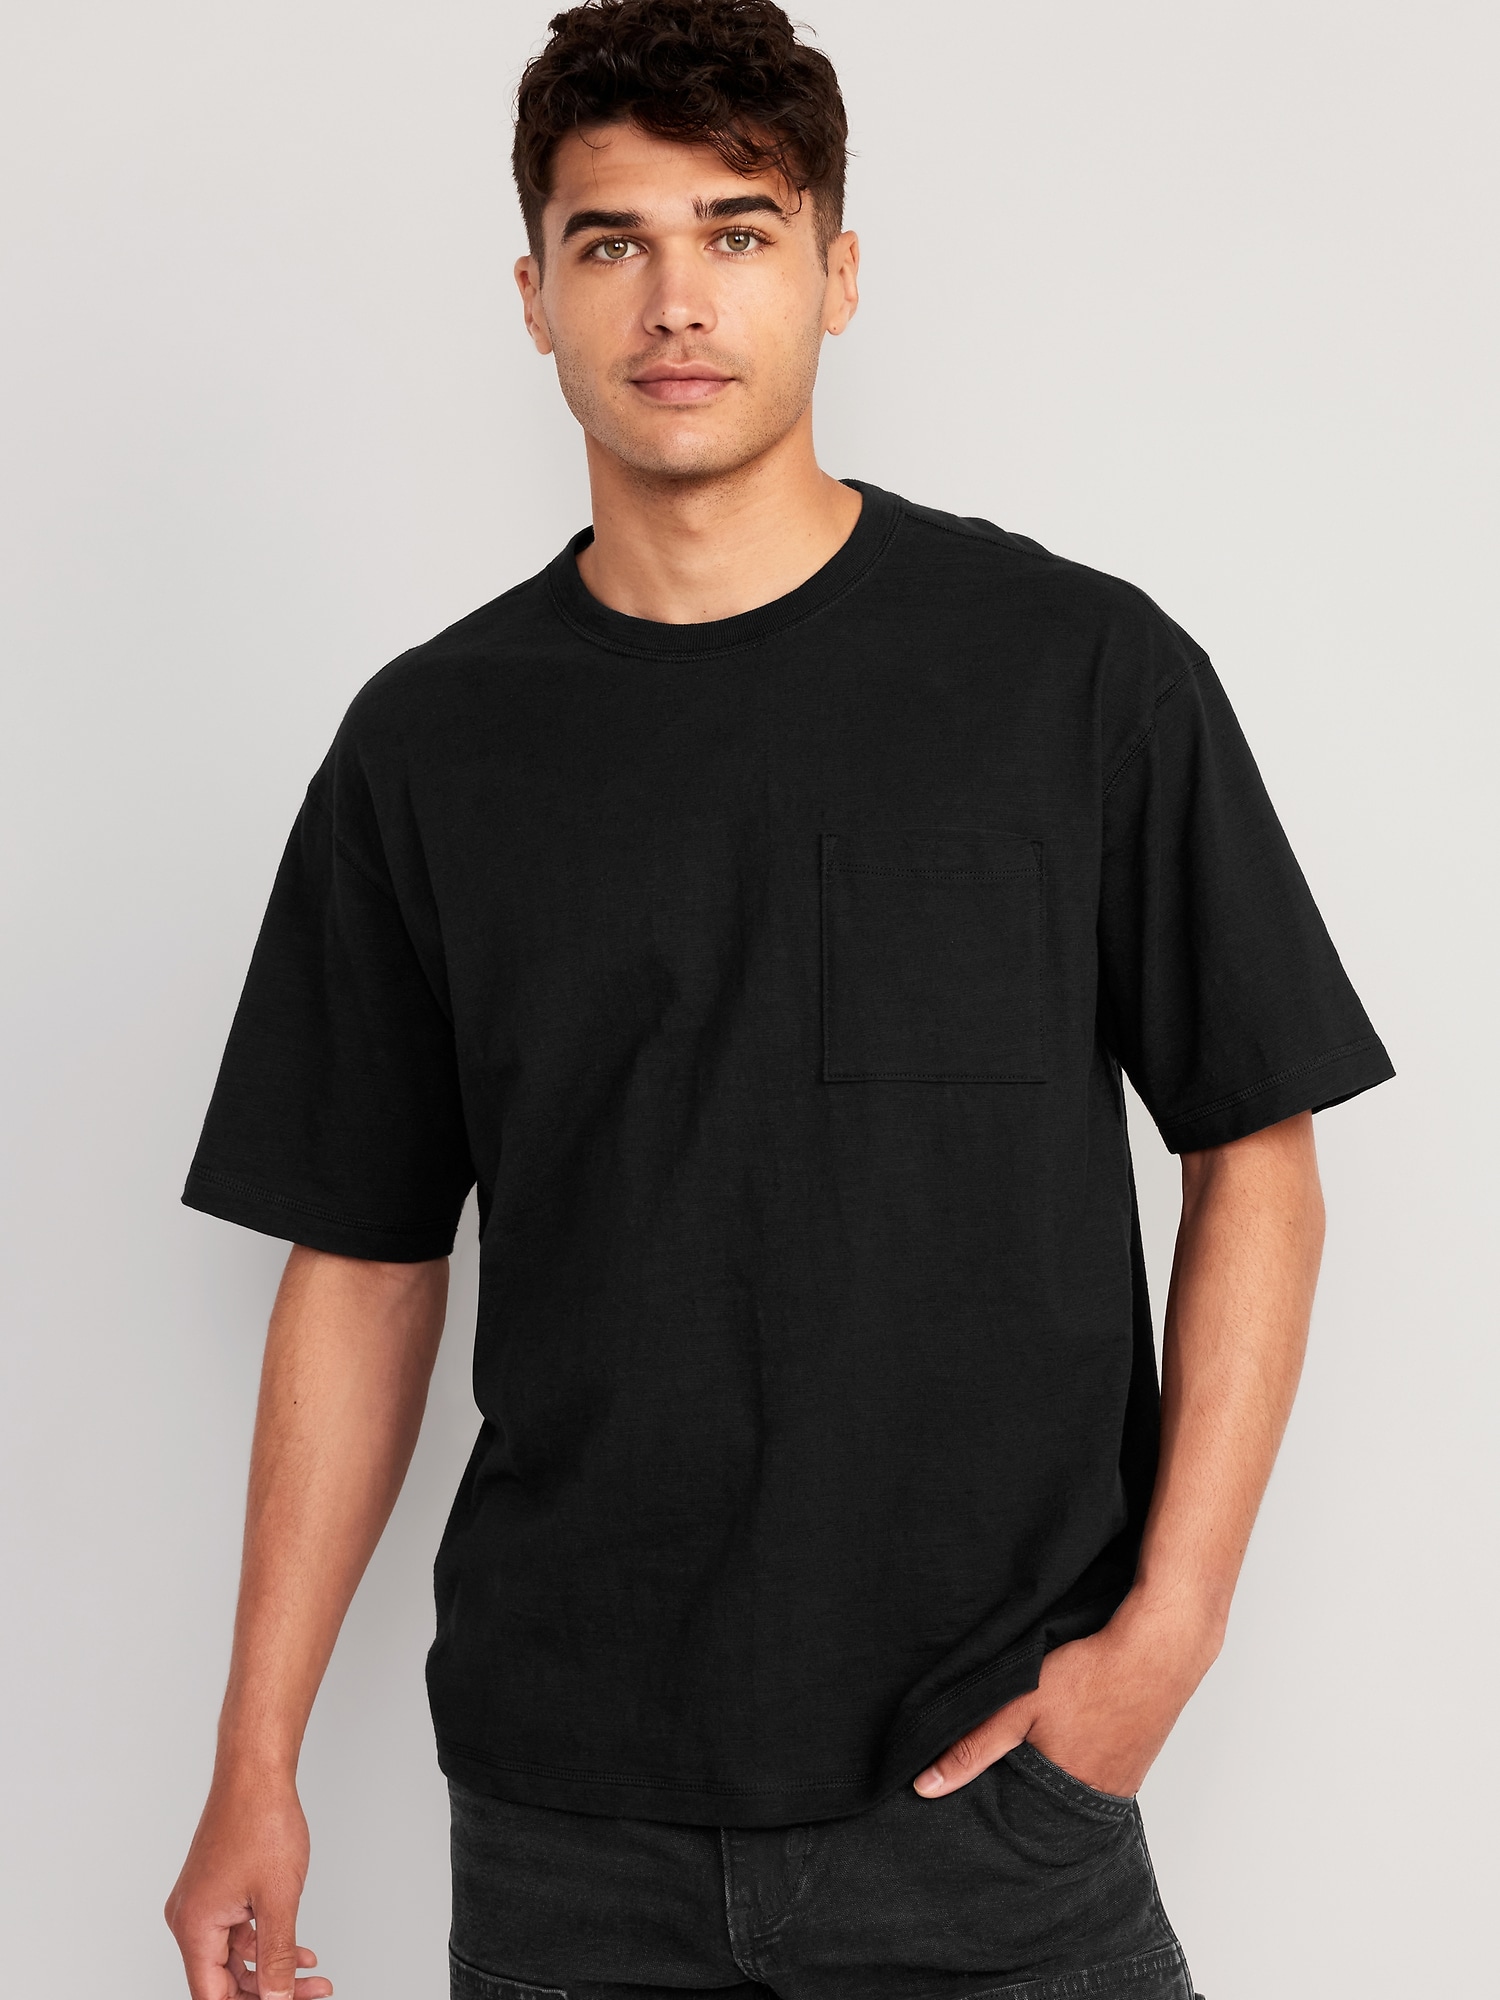 Slub-Knit Pocket T-Shirt for Men Navy Old 